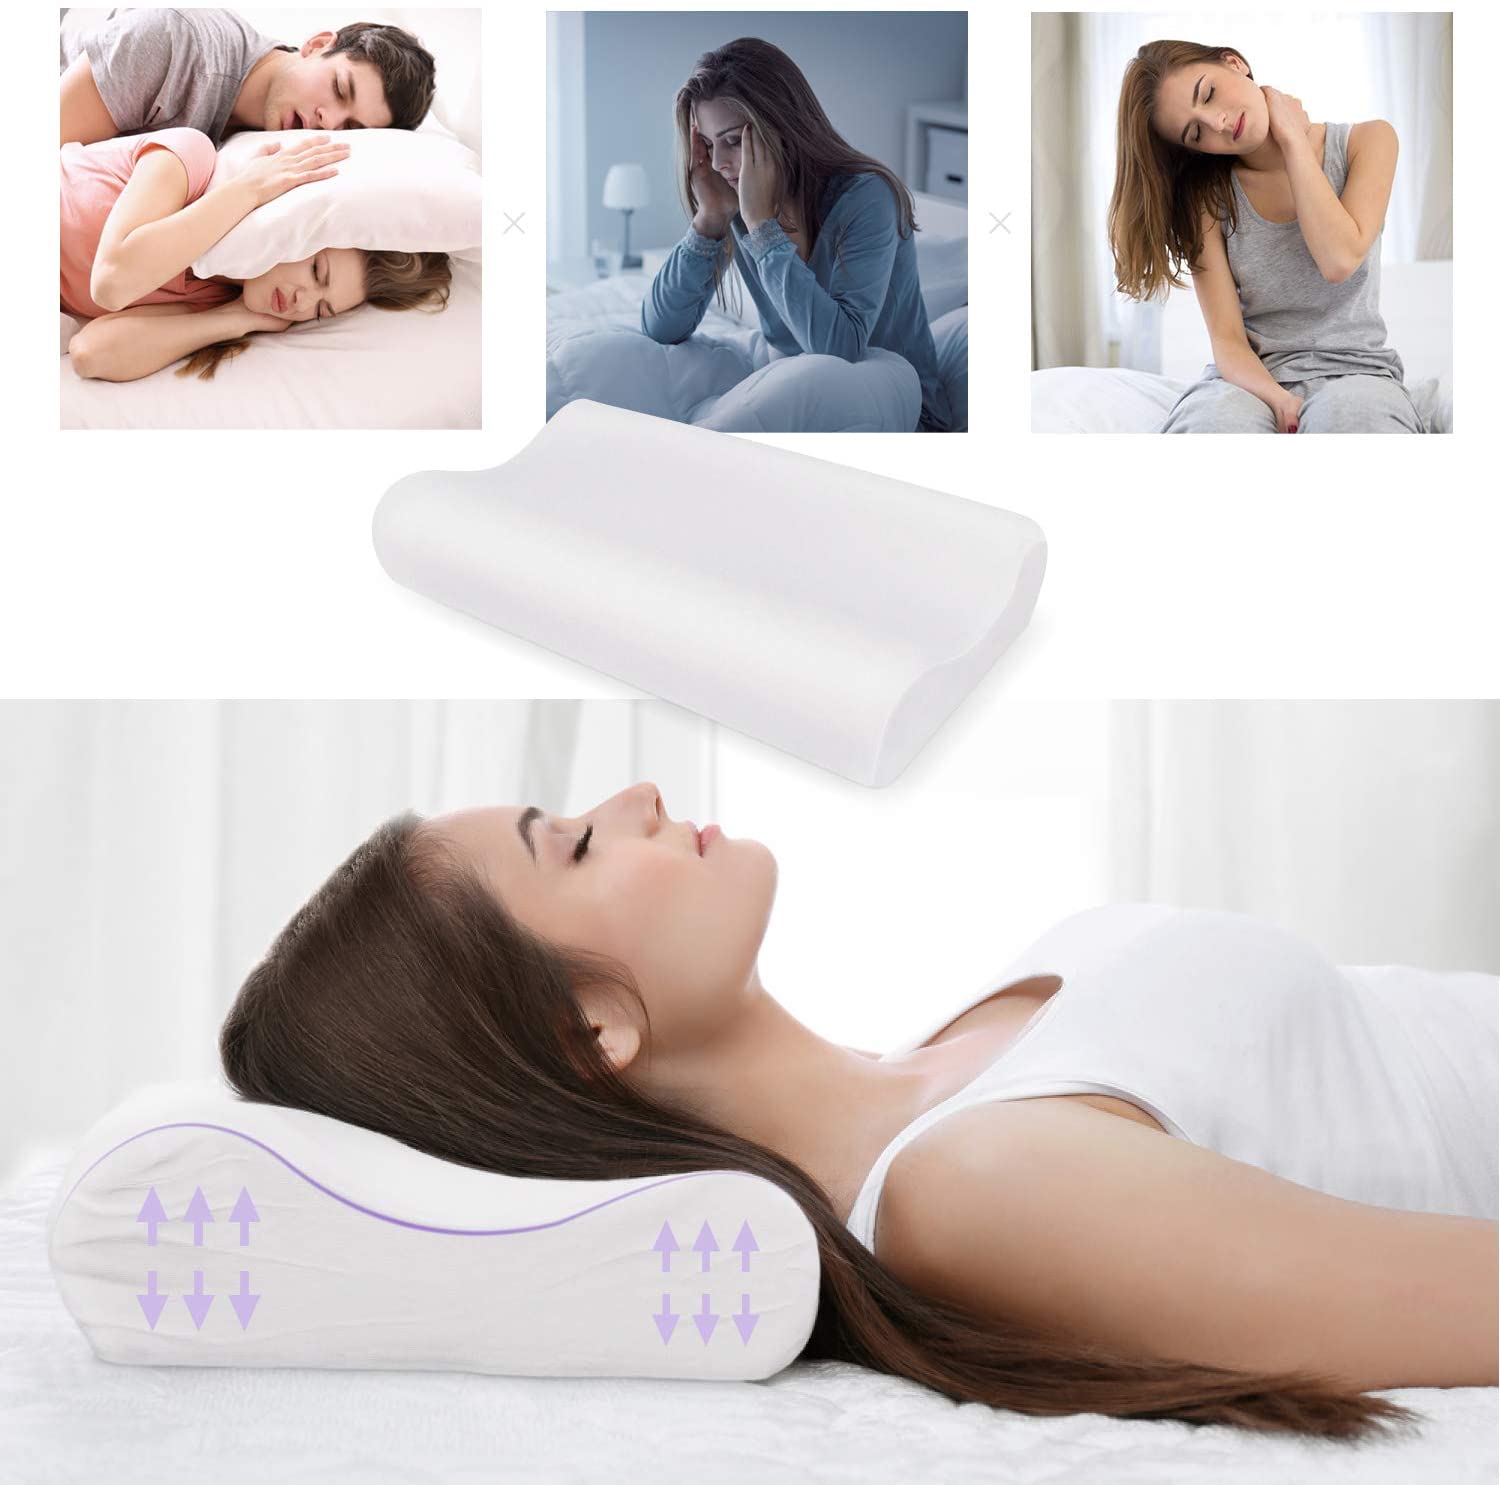 ZG-Home Contour Pillow, 24" x 15", White